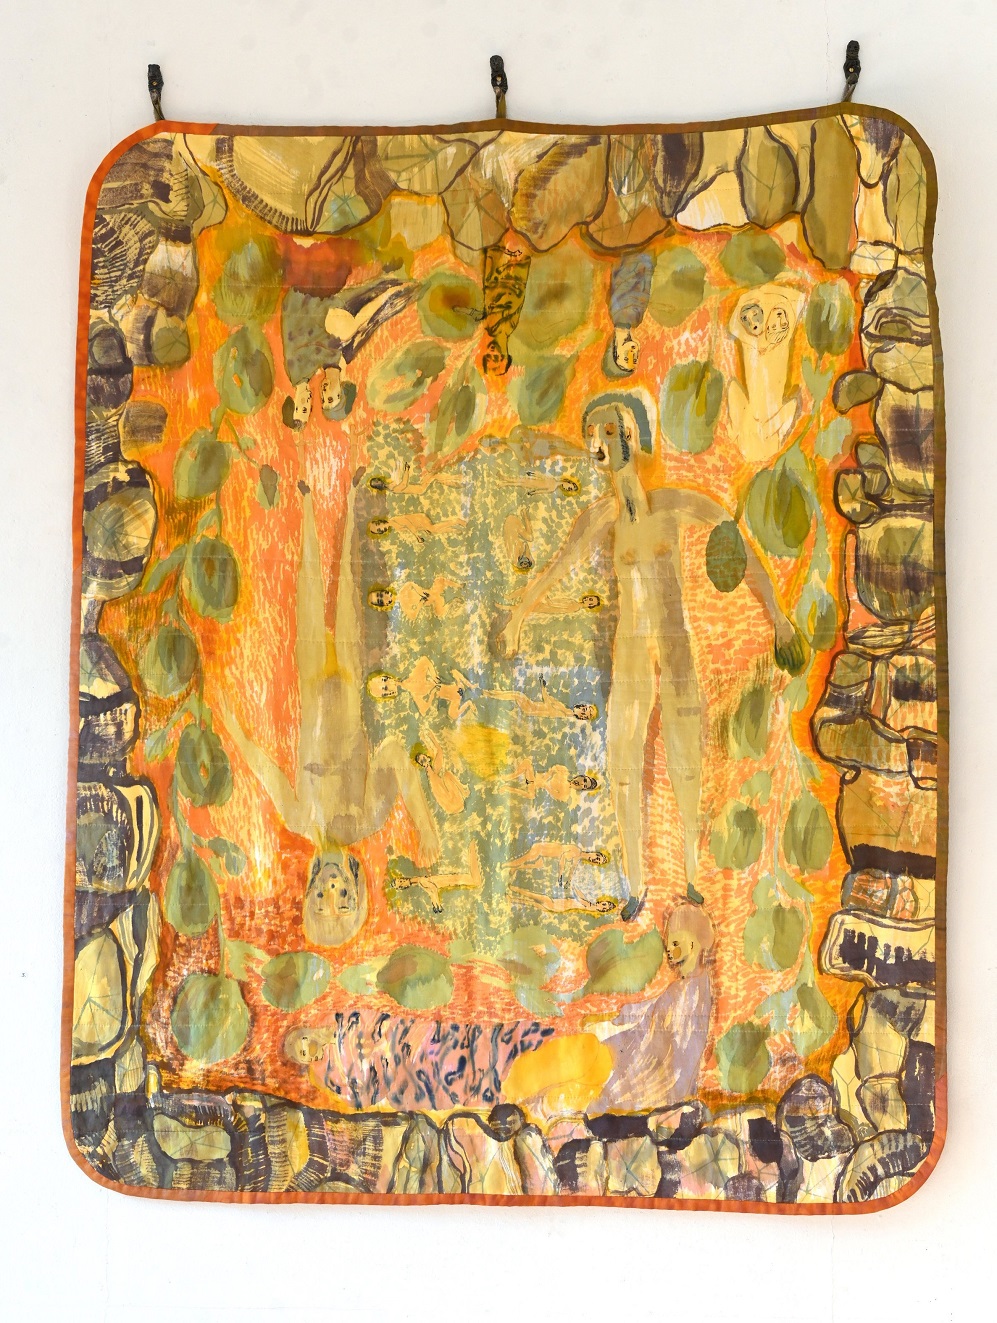 A quilt by artist Nichola Shanley.